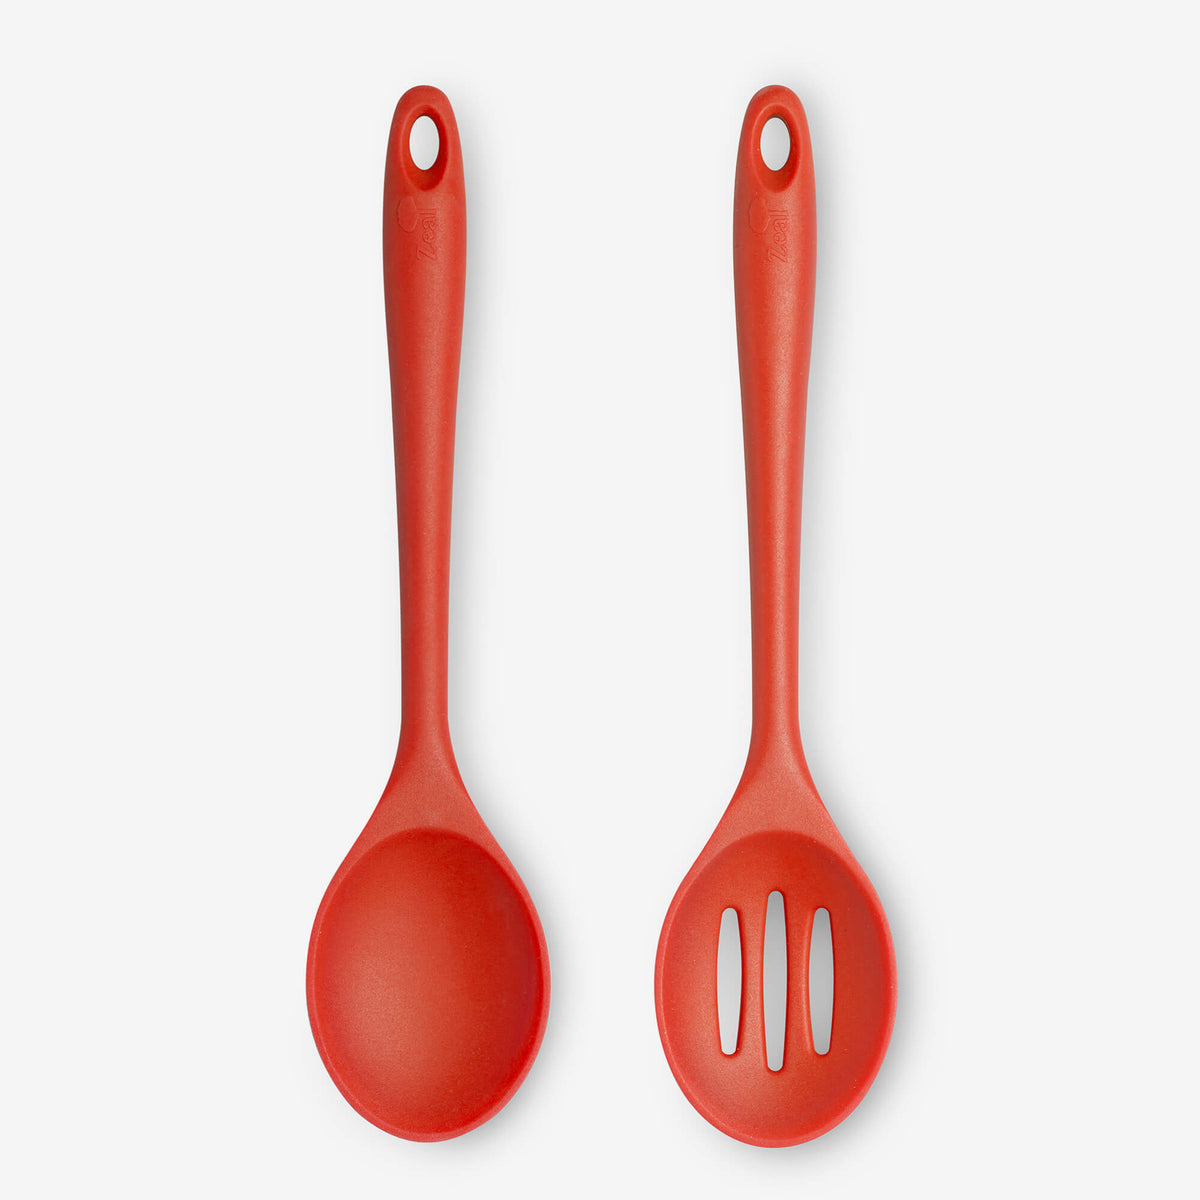 Yesbay 8pcs/set Stainless Steel Handle Measuring Spoons Baking Cooking Scale Scoop,Red